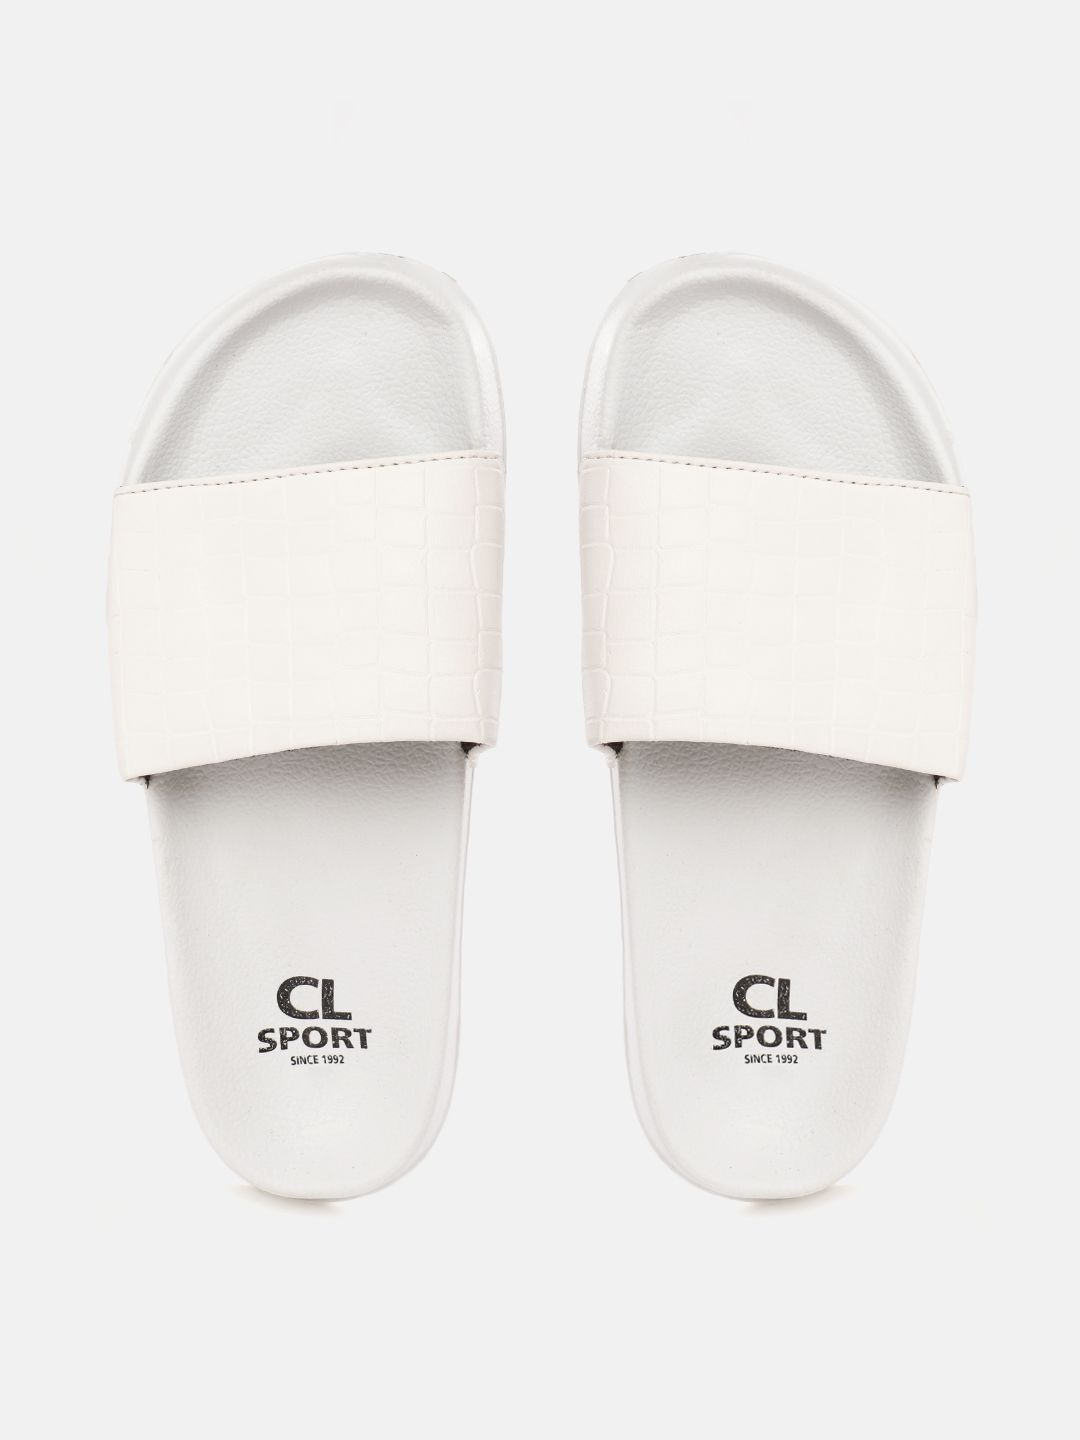 Carlton London sports Women White Croc-Textured Sliders Price in India